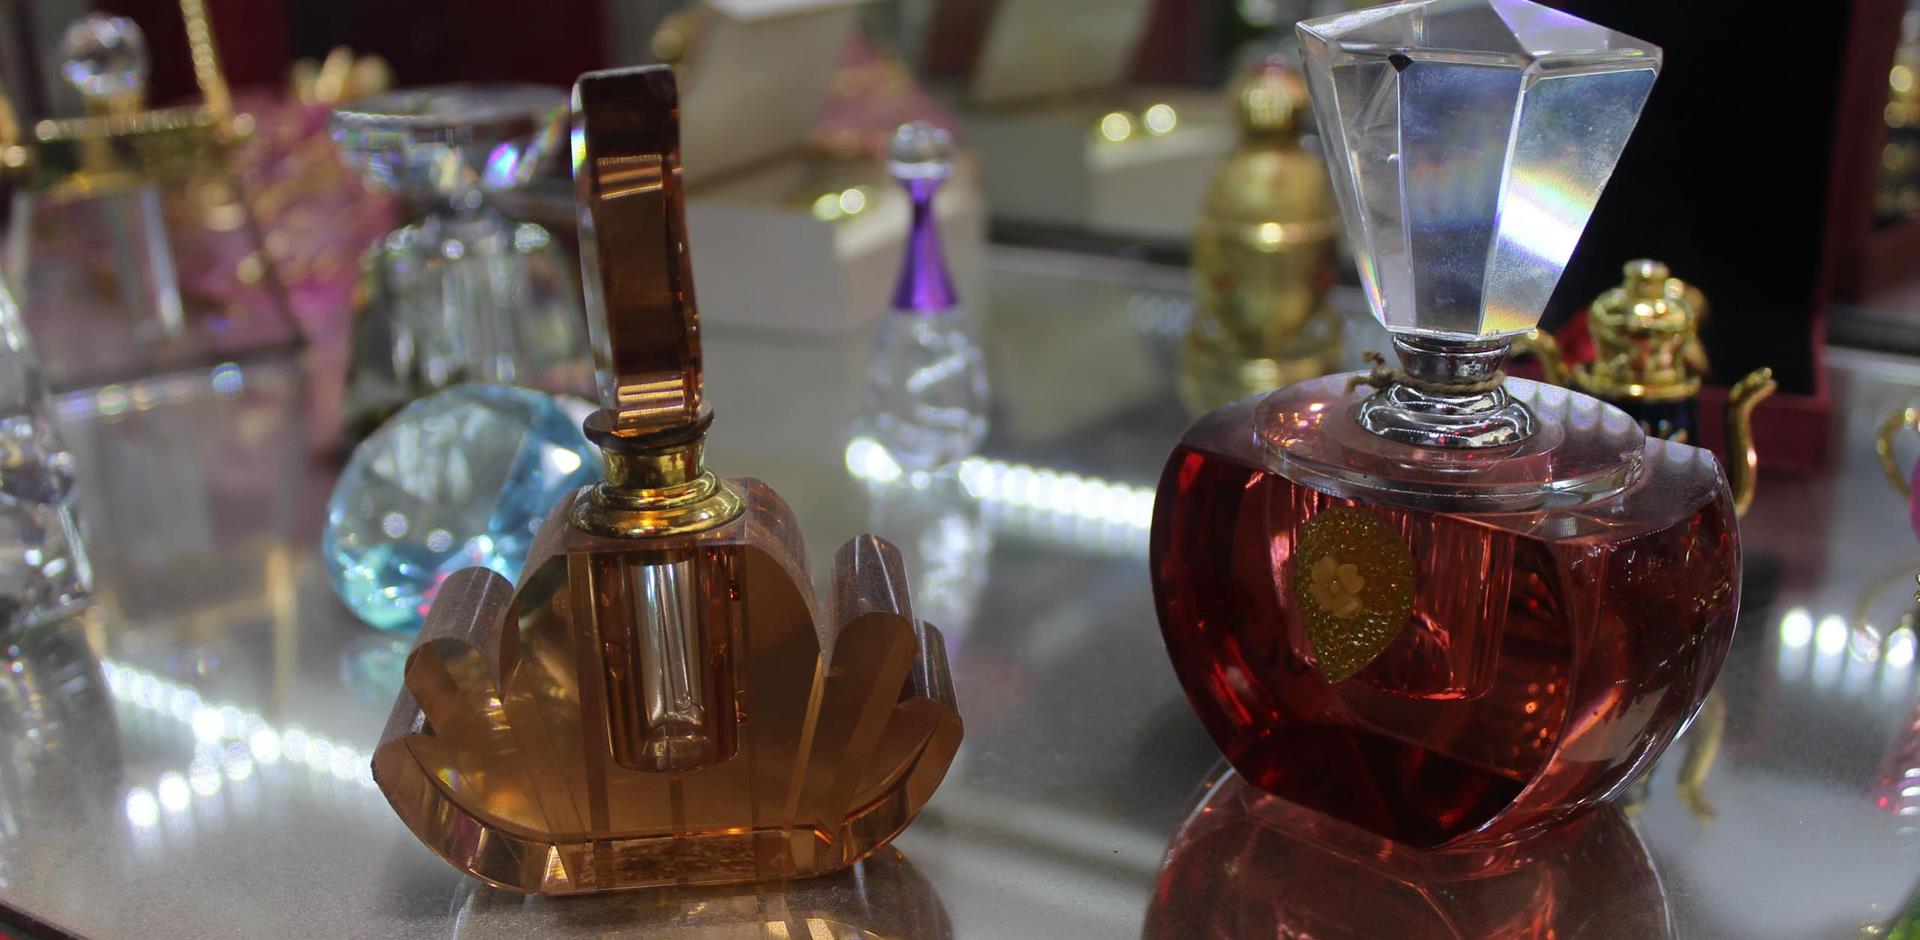 Follow India's perfume trail